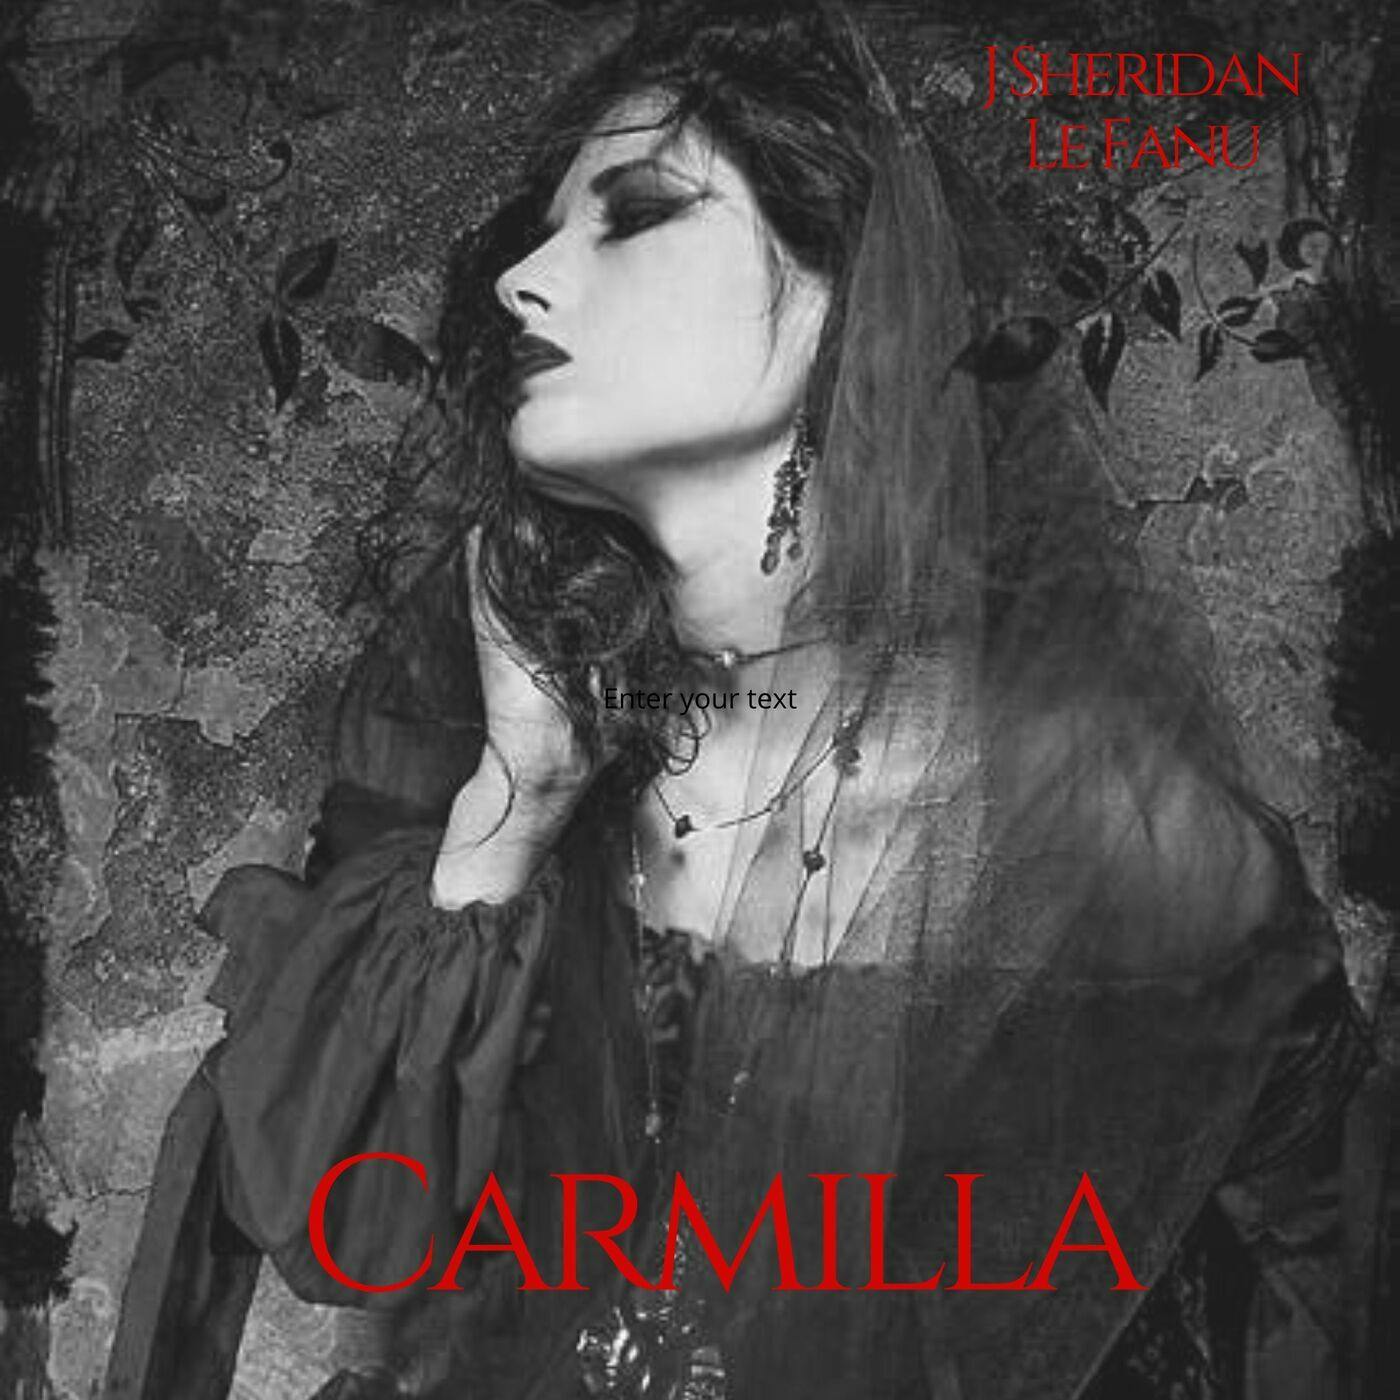 Episode 14: Carmilla by J S Sheridan Le Fanu (Part One)